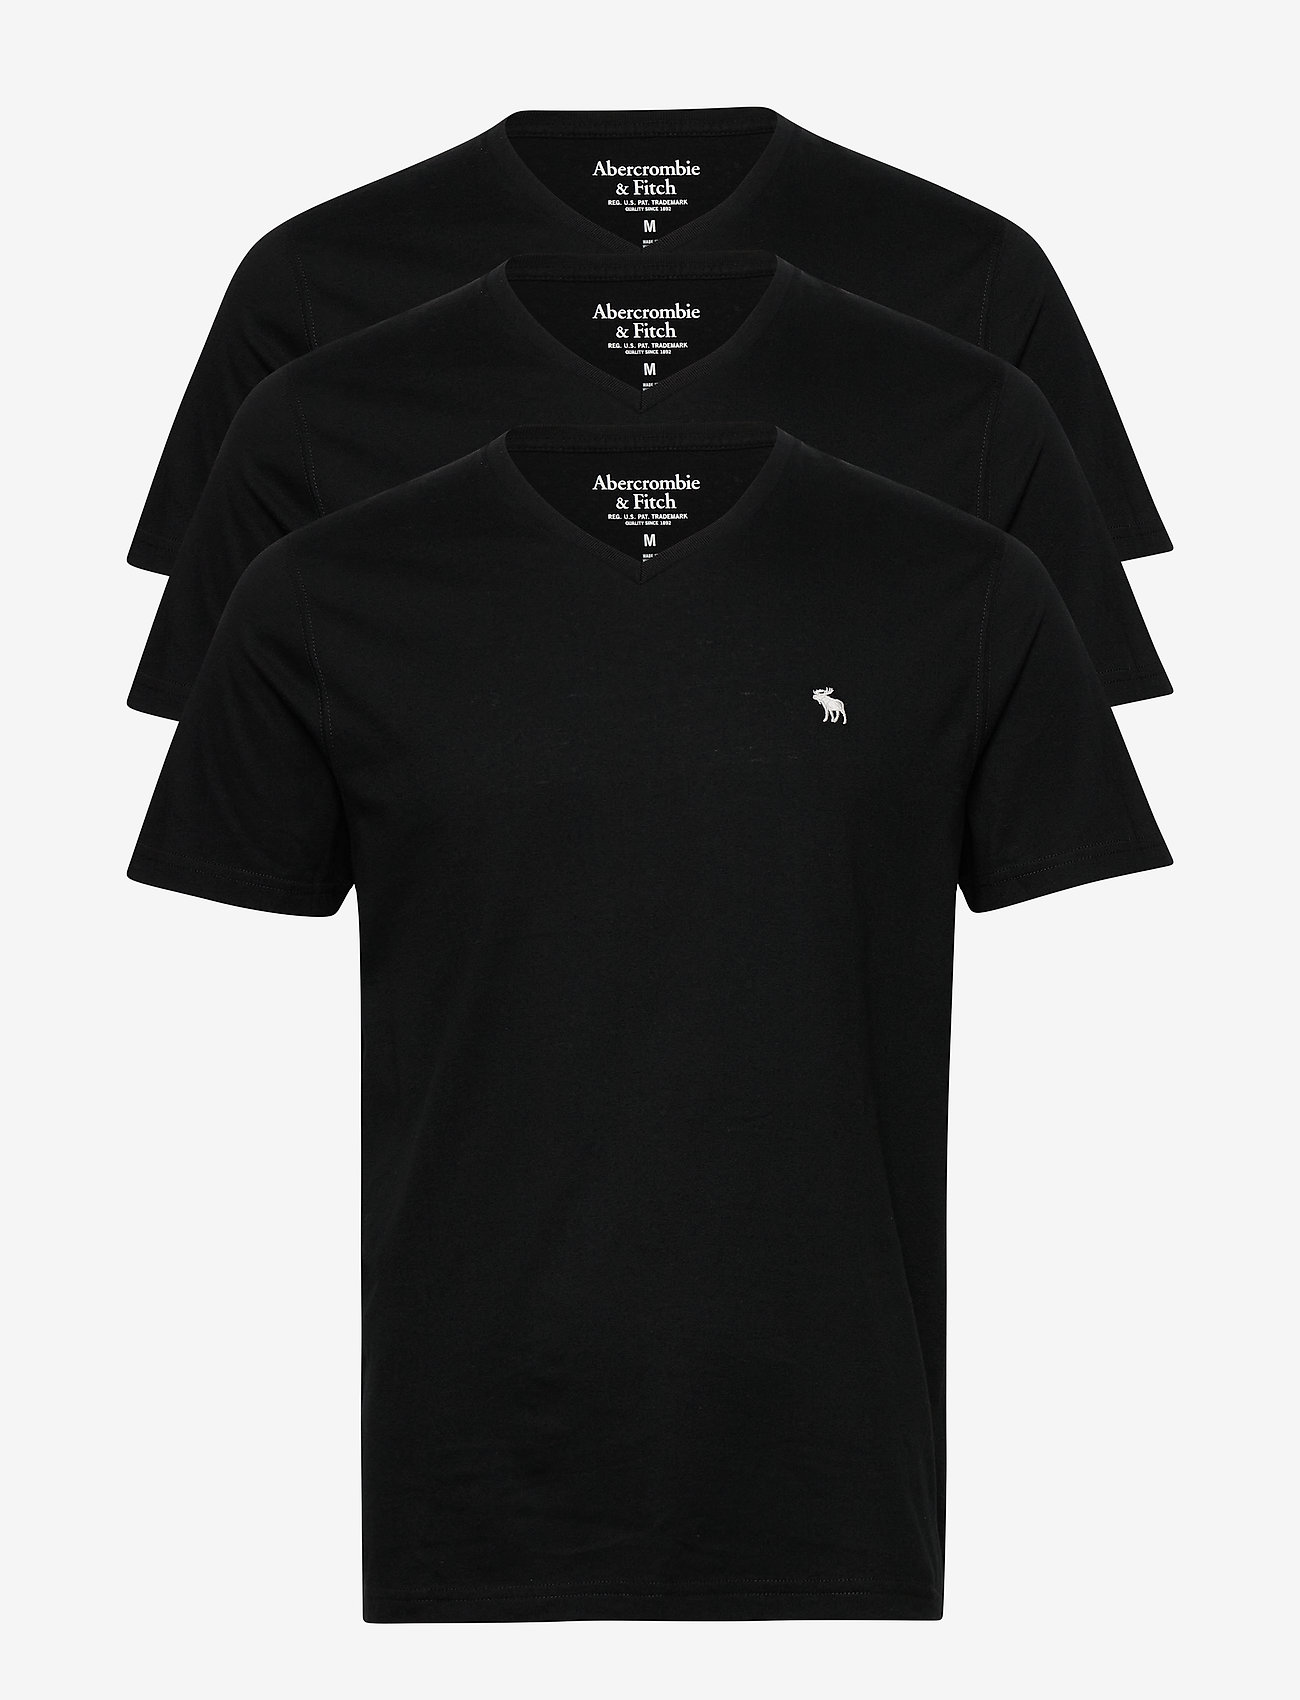 abercrombie black shirt